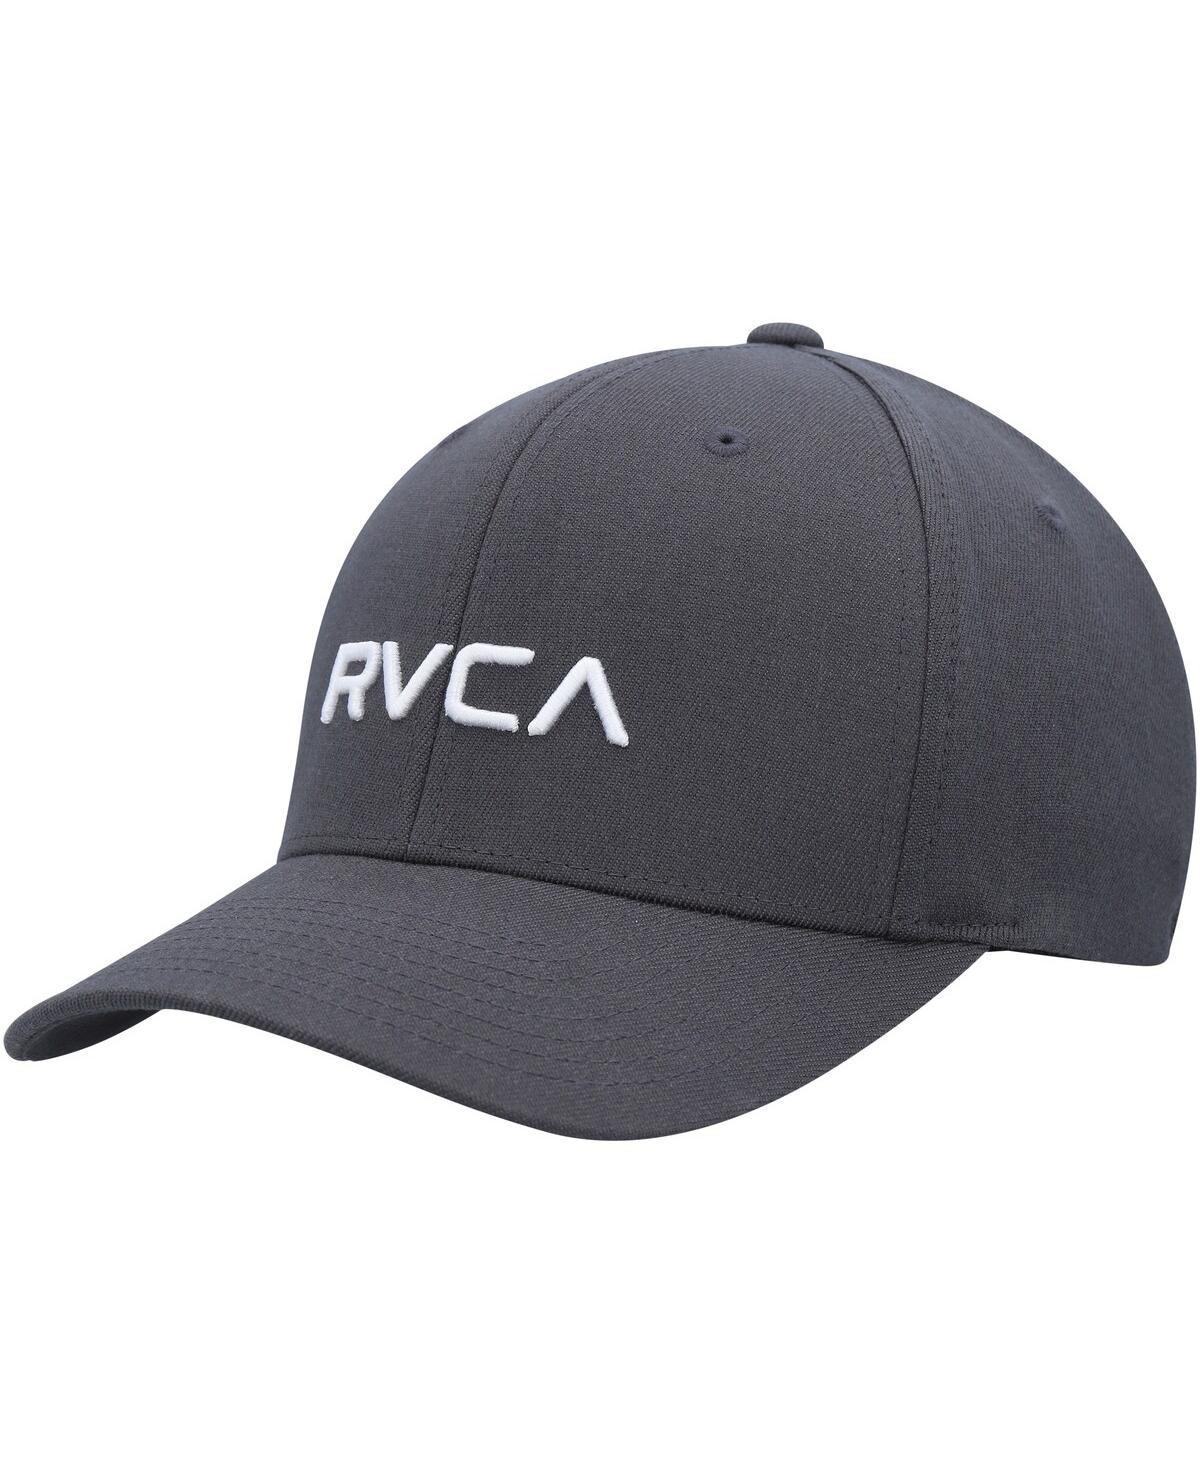 Rvca Men's  Graphite Flex Fit Hat